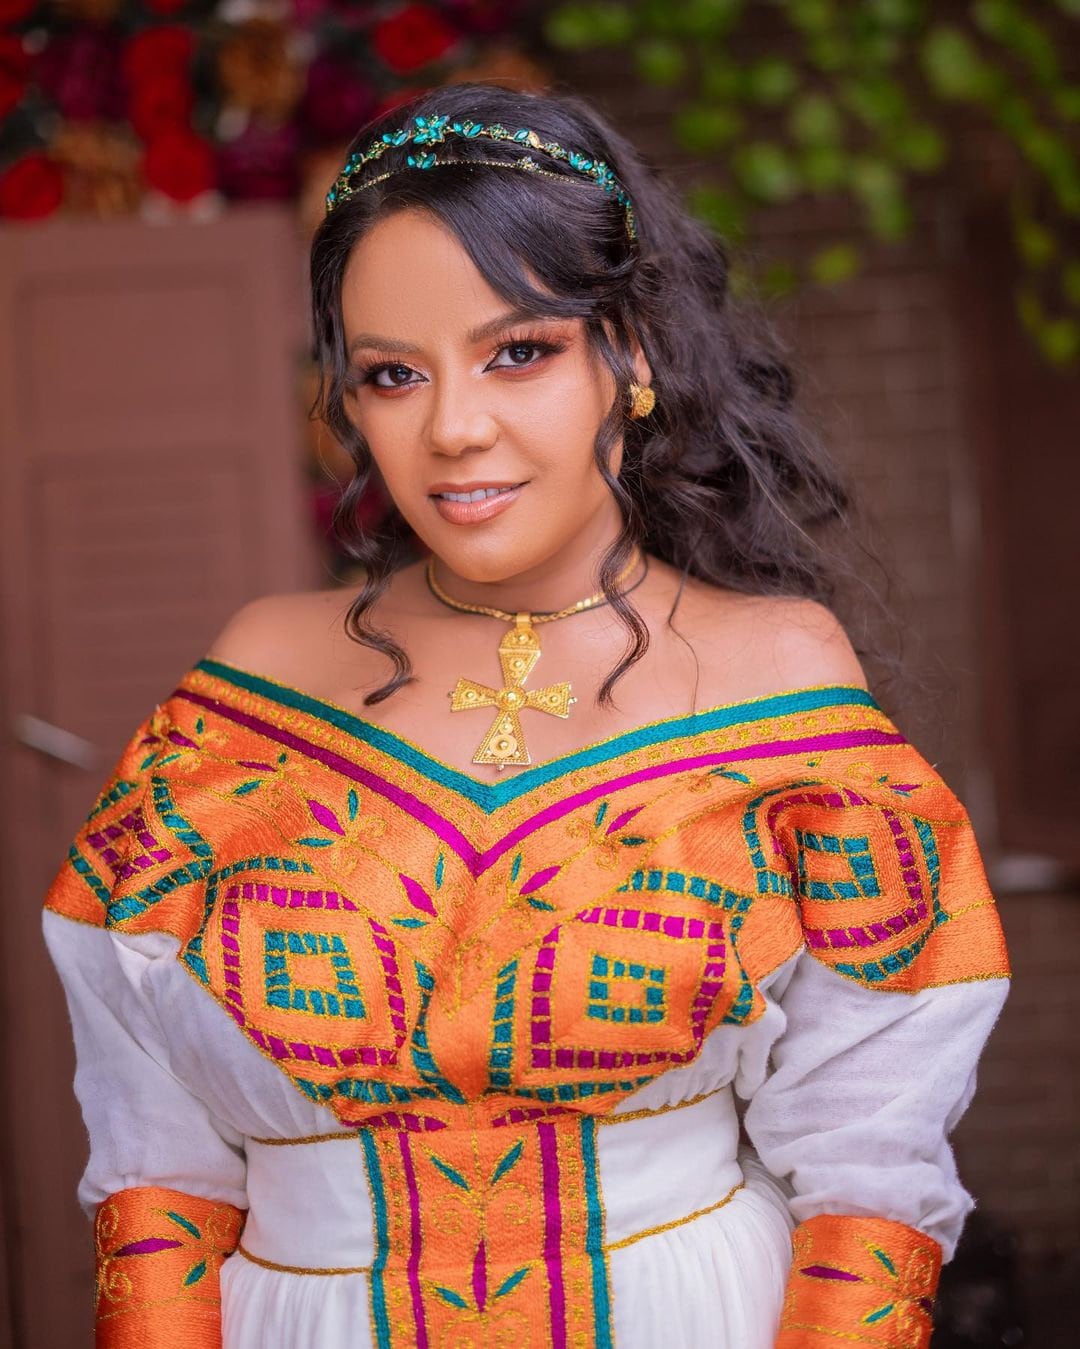 Pretty Habesha Kemis with Intricate Tilf Design, Habesha Kemis, Eritrean dress, ሀበሻ